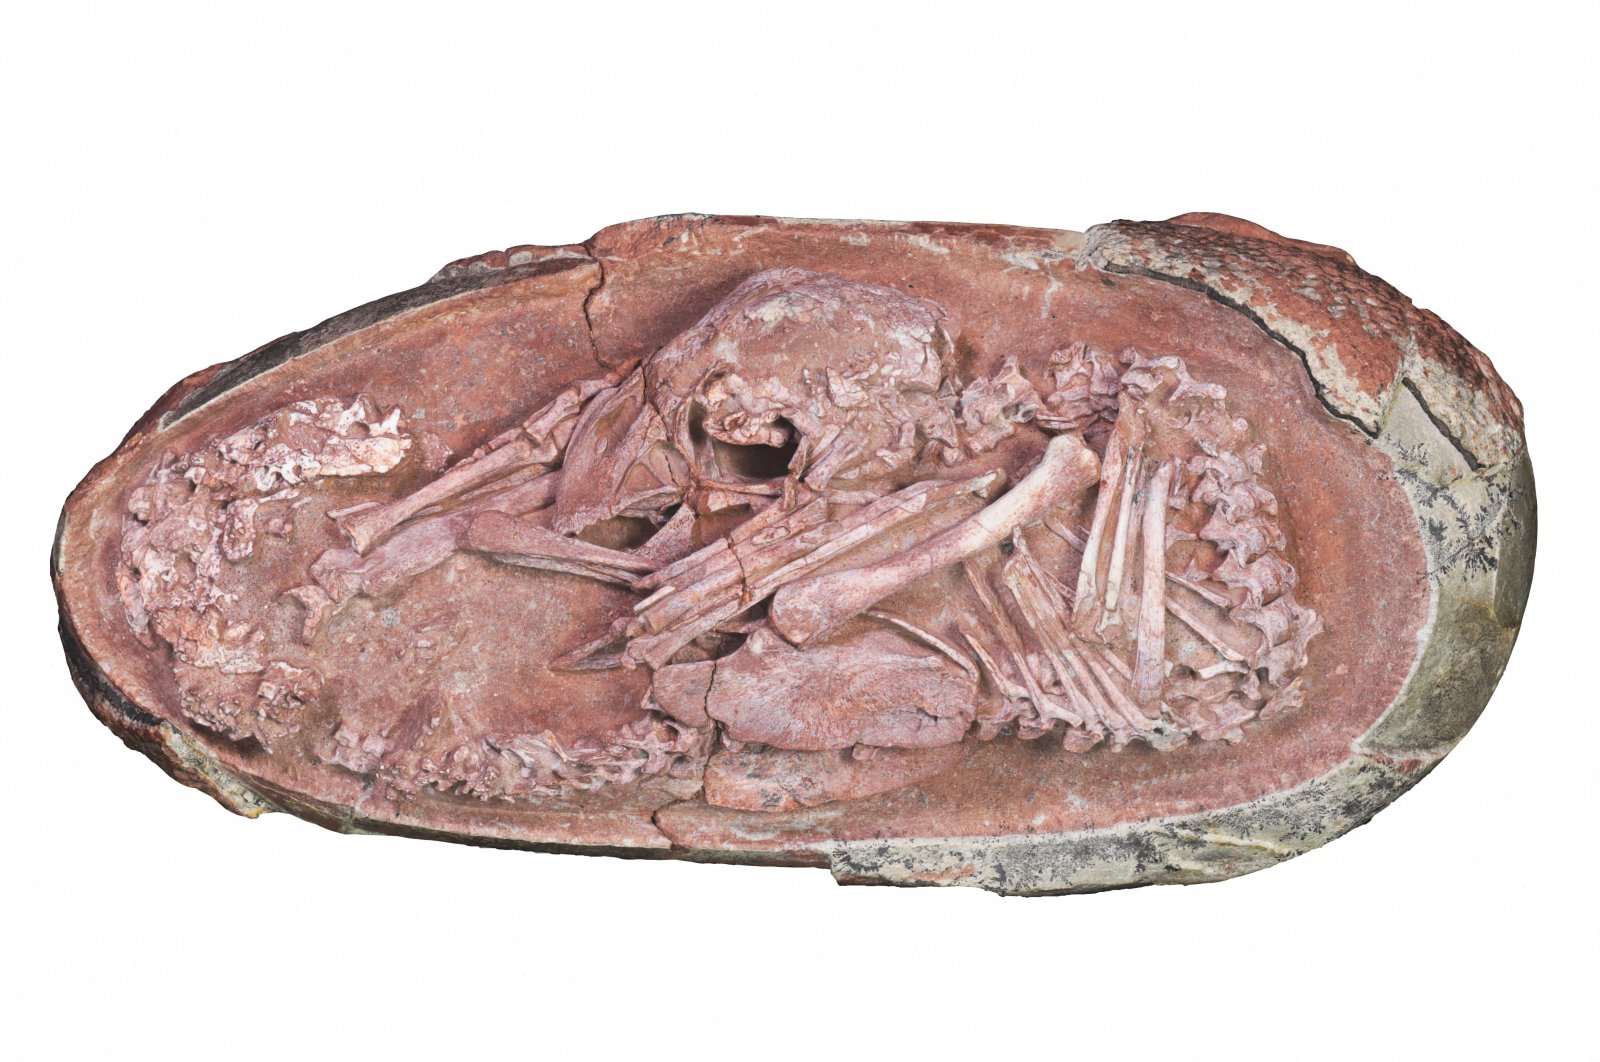 Embrio dinosaurus berusia 66 juta tahun yang diawetkan dengan sempurna ditemukan di China